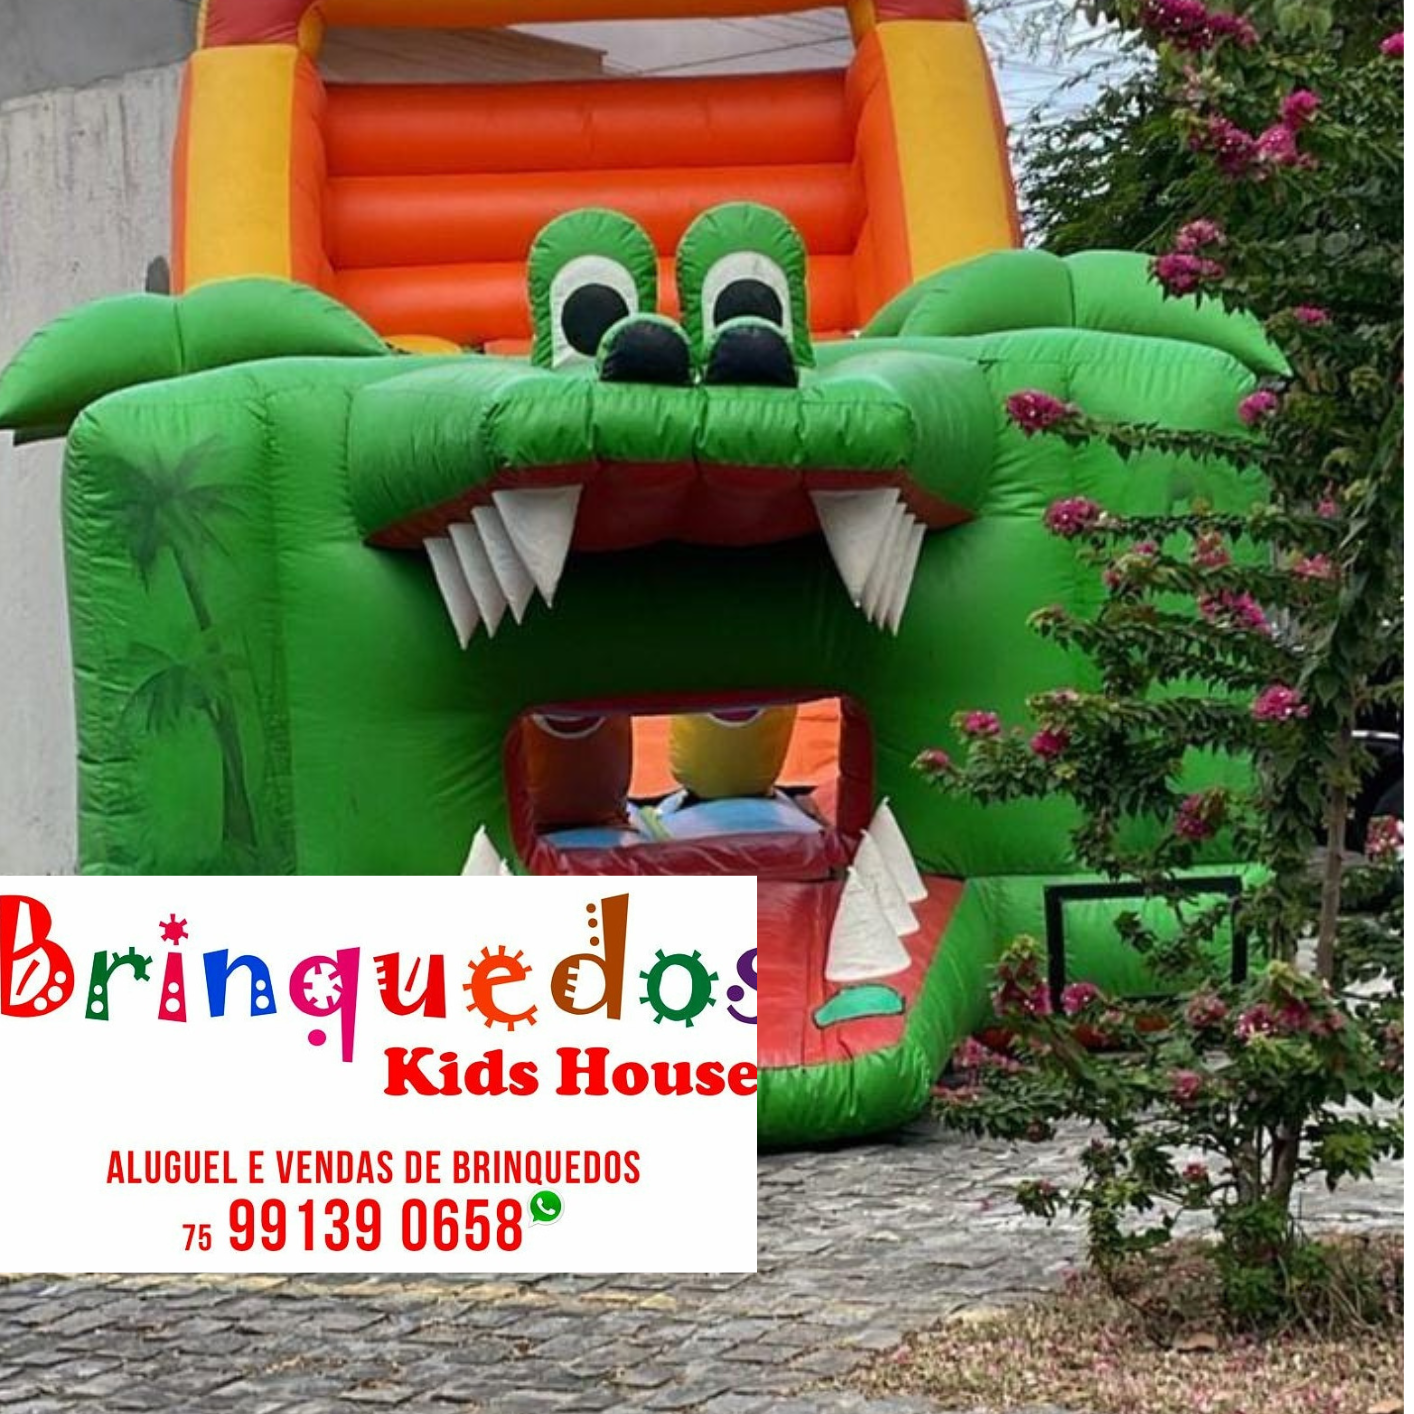 BRINQUEDOS KIDS HOUSE